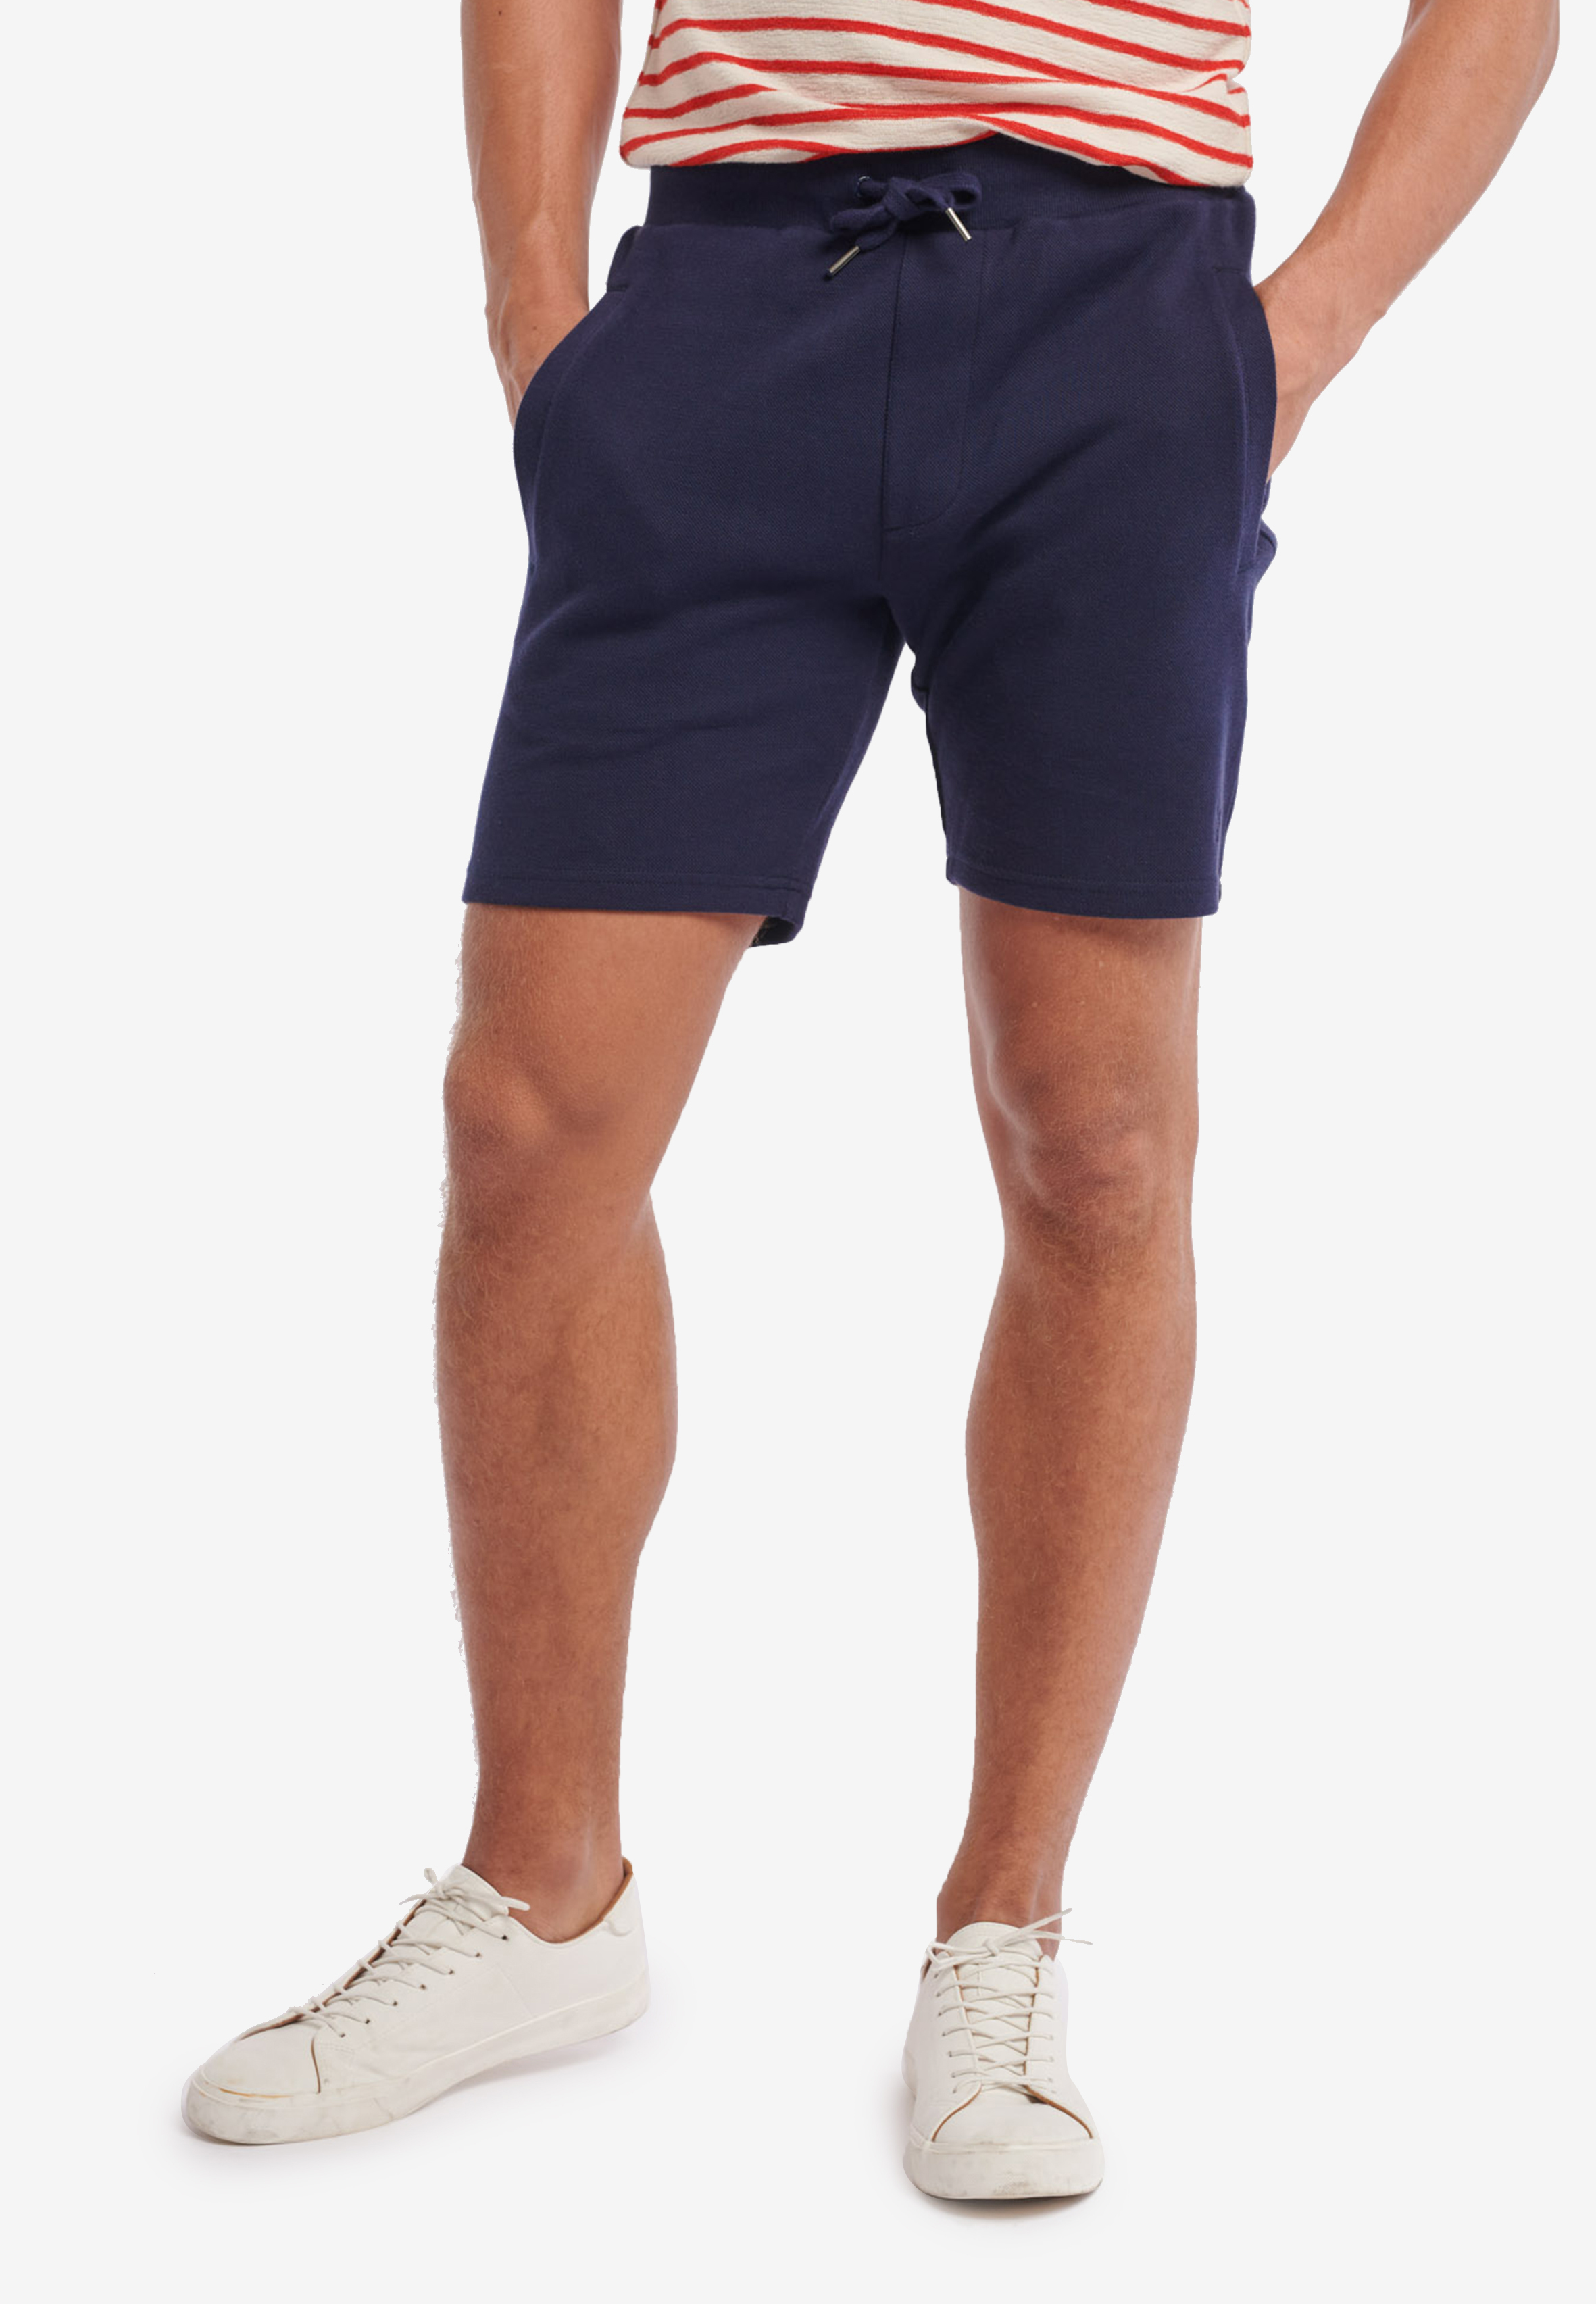 Buy Shorts For Men on ZALORA